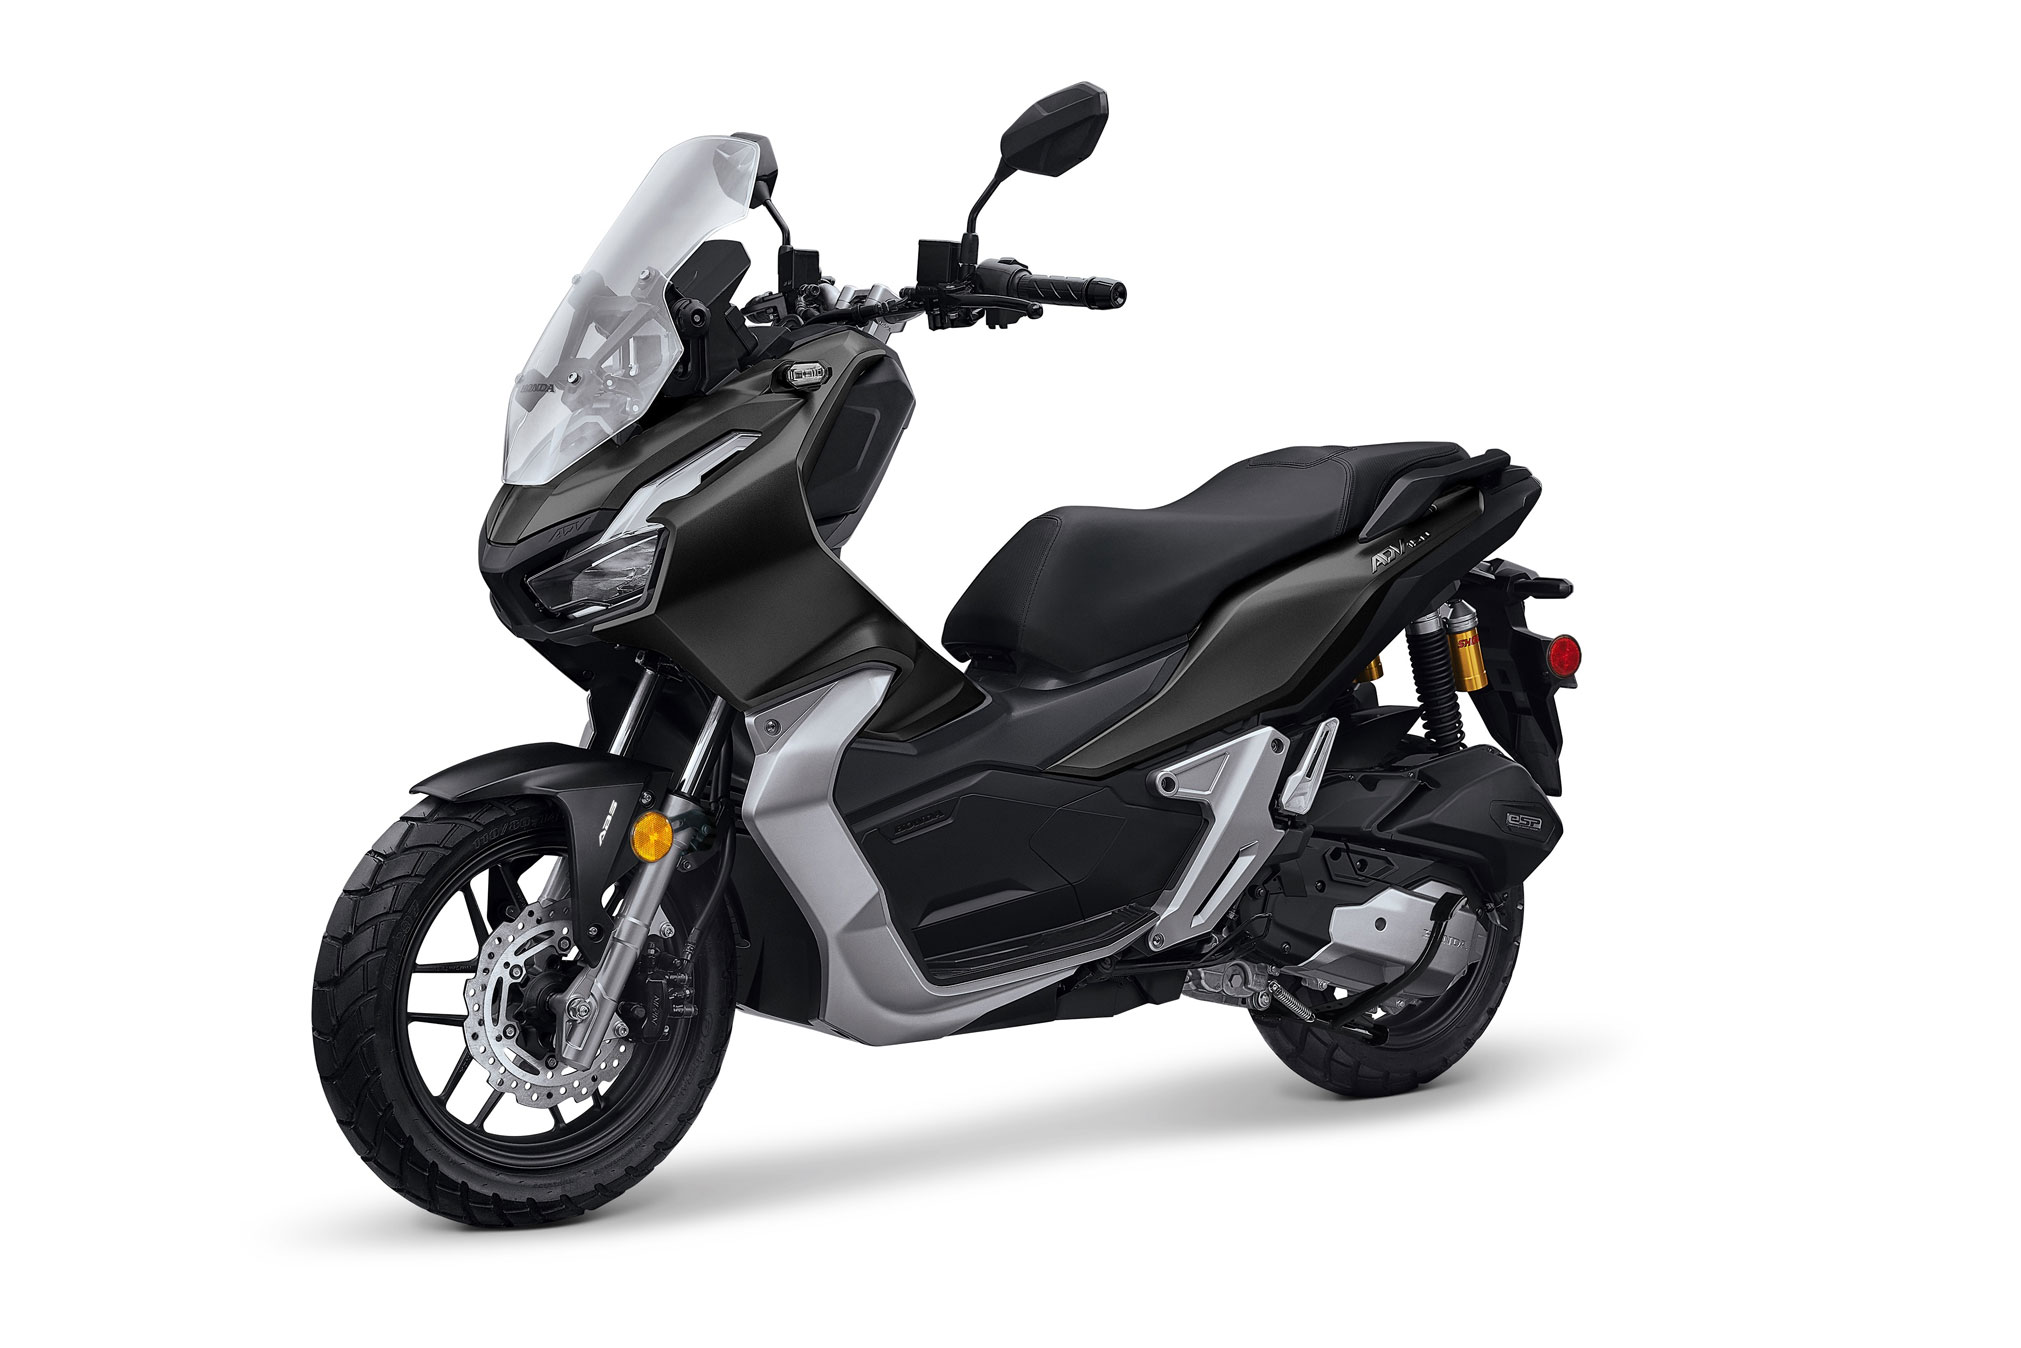 2021 Honda ADV150 Guide • Total Motorcycle